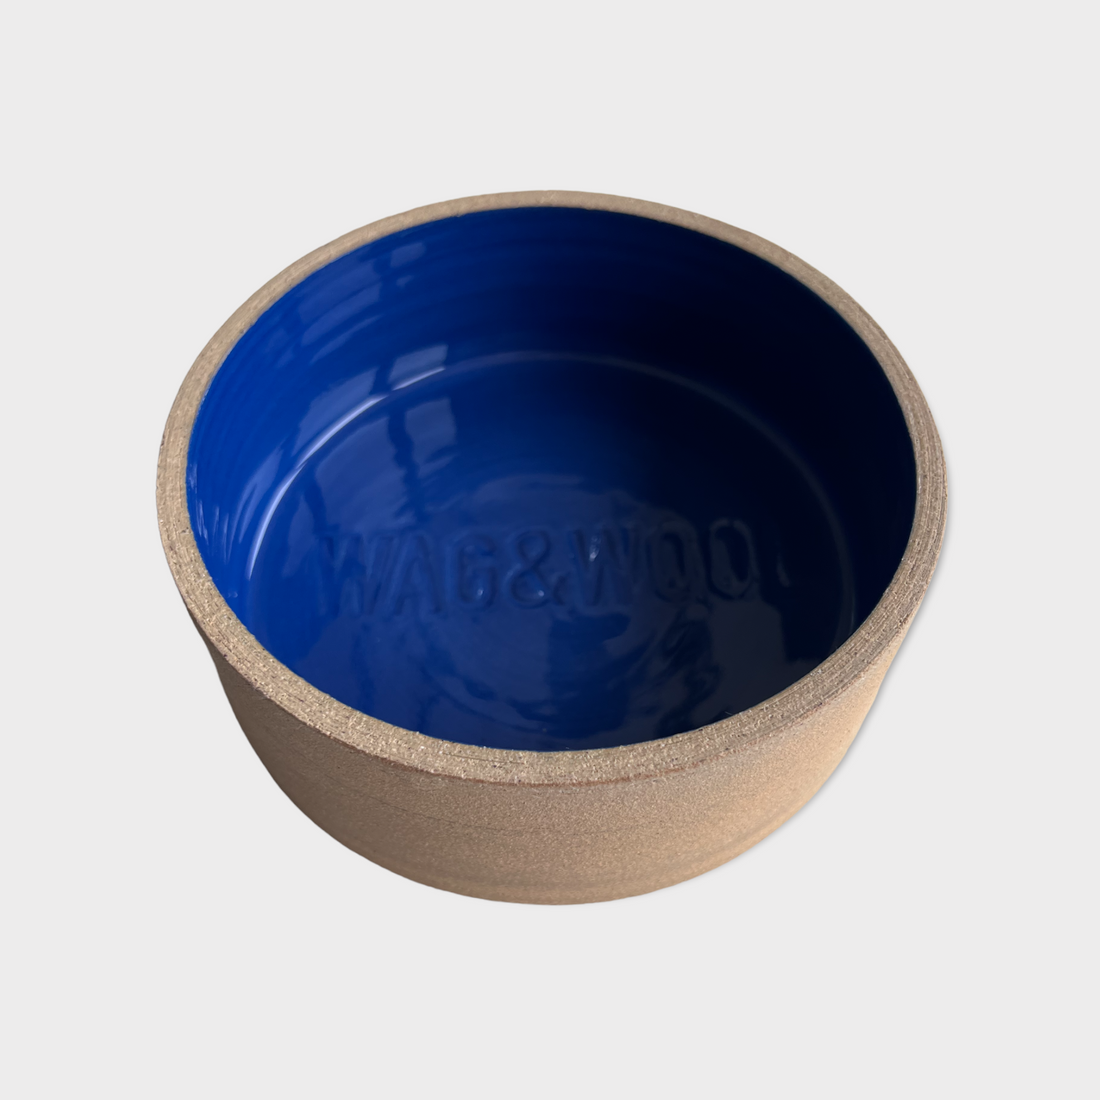 Blue ceramic dog bowl